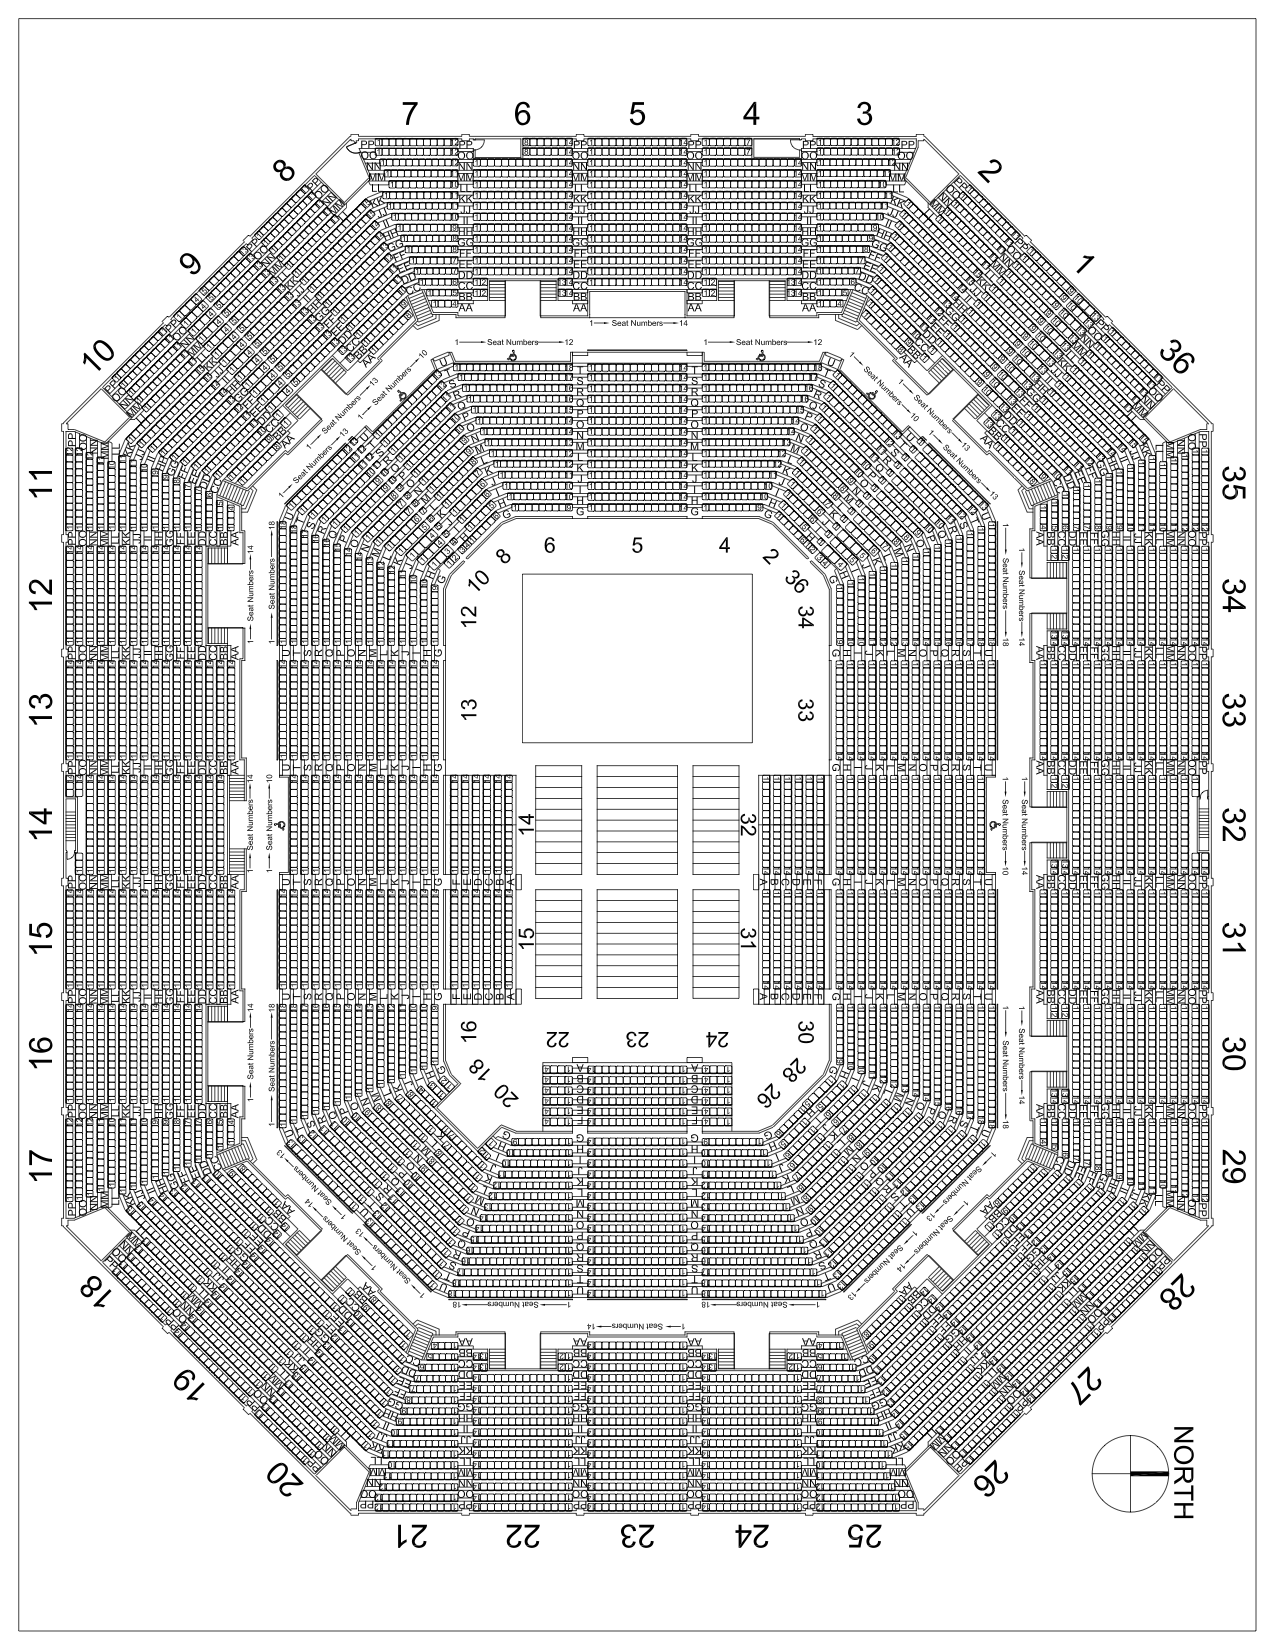 Wsu Football Stadium Seating Chart